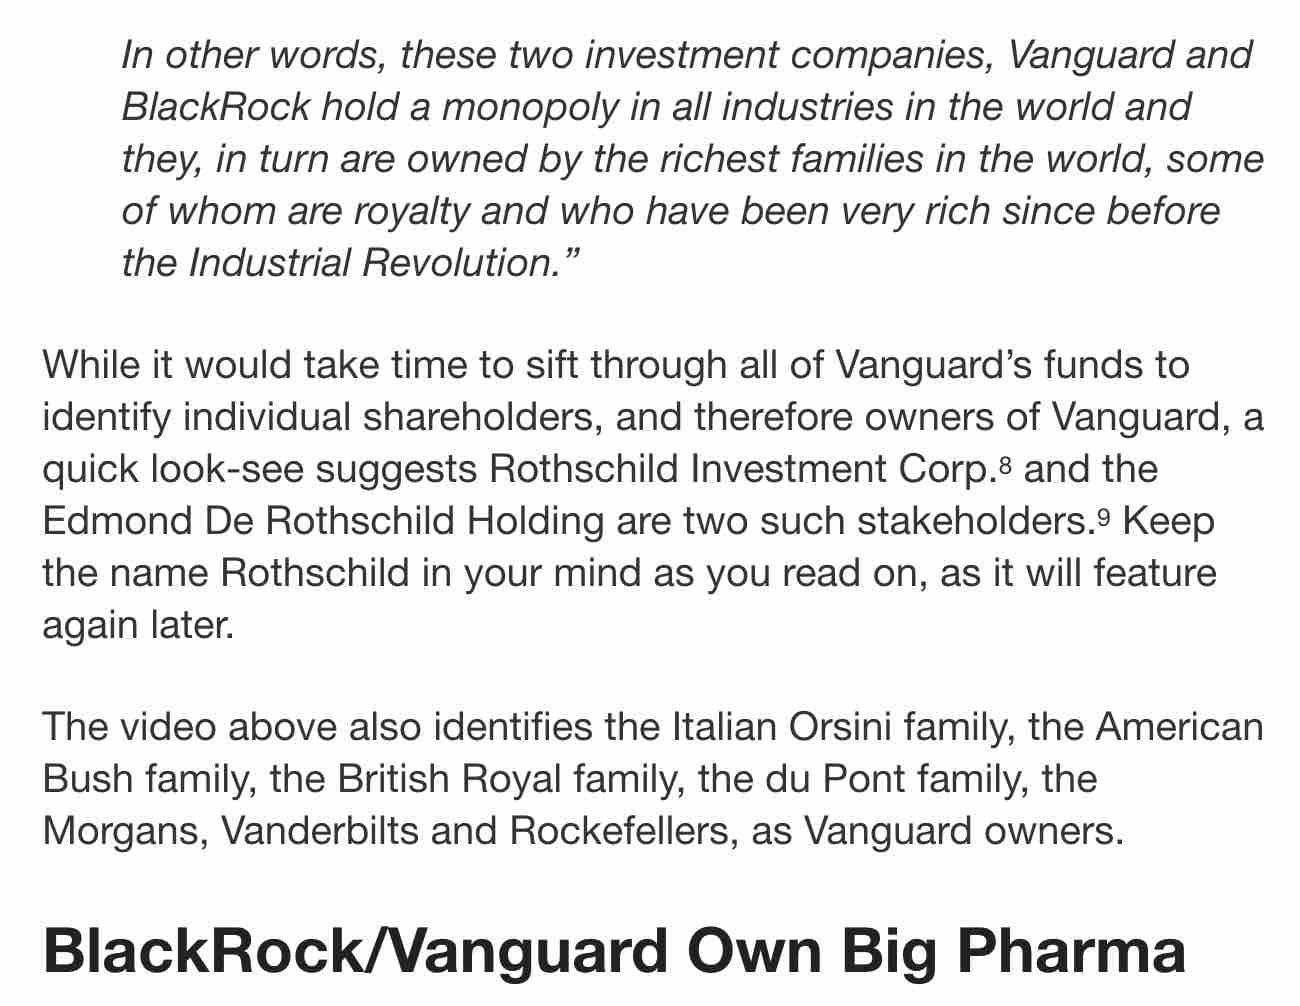 blackrock-et-vanguard-possedent-big-pharma.jpg